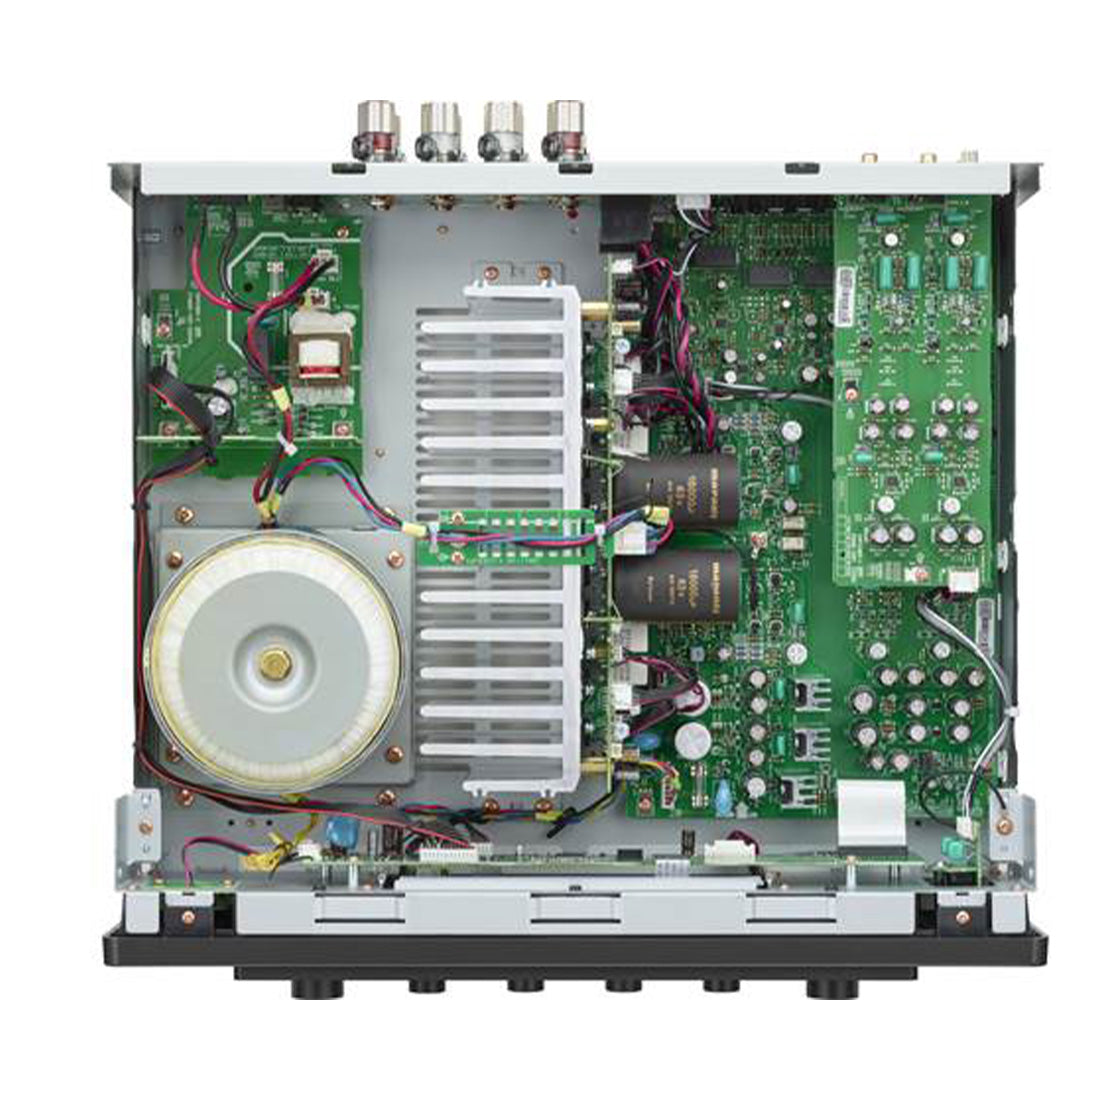 Marantz Model 50 Pure Analog Stereo Integrated Amplifier